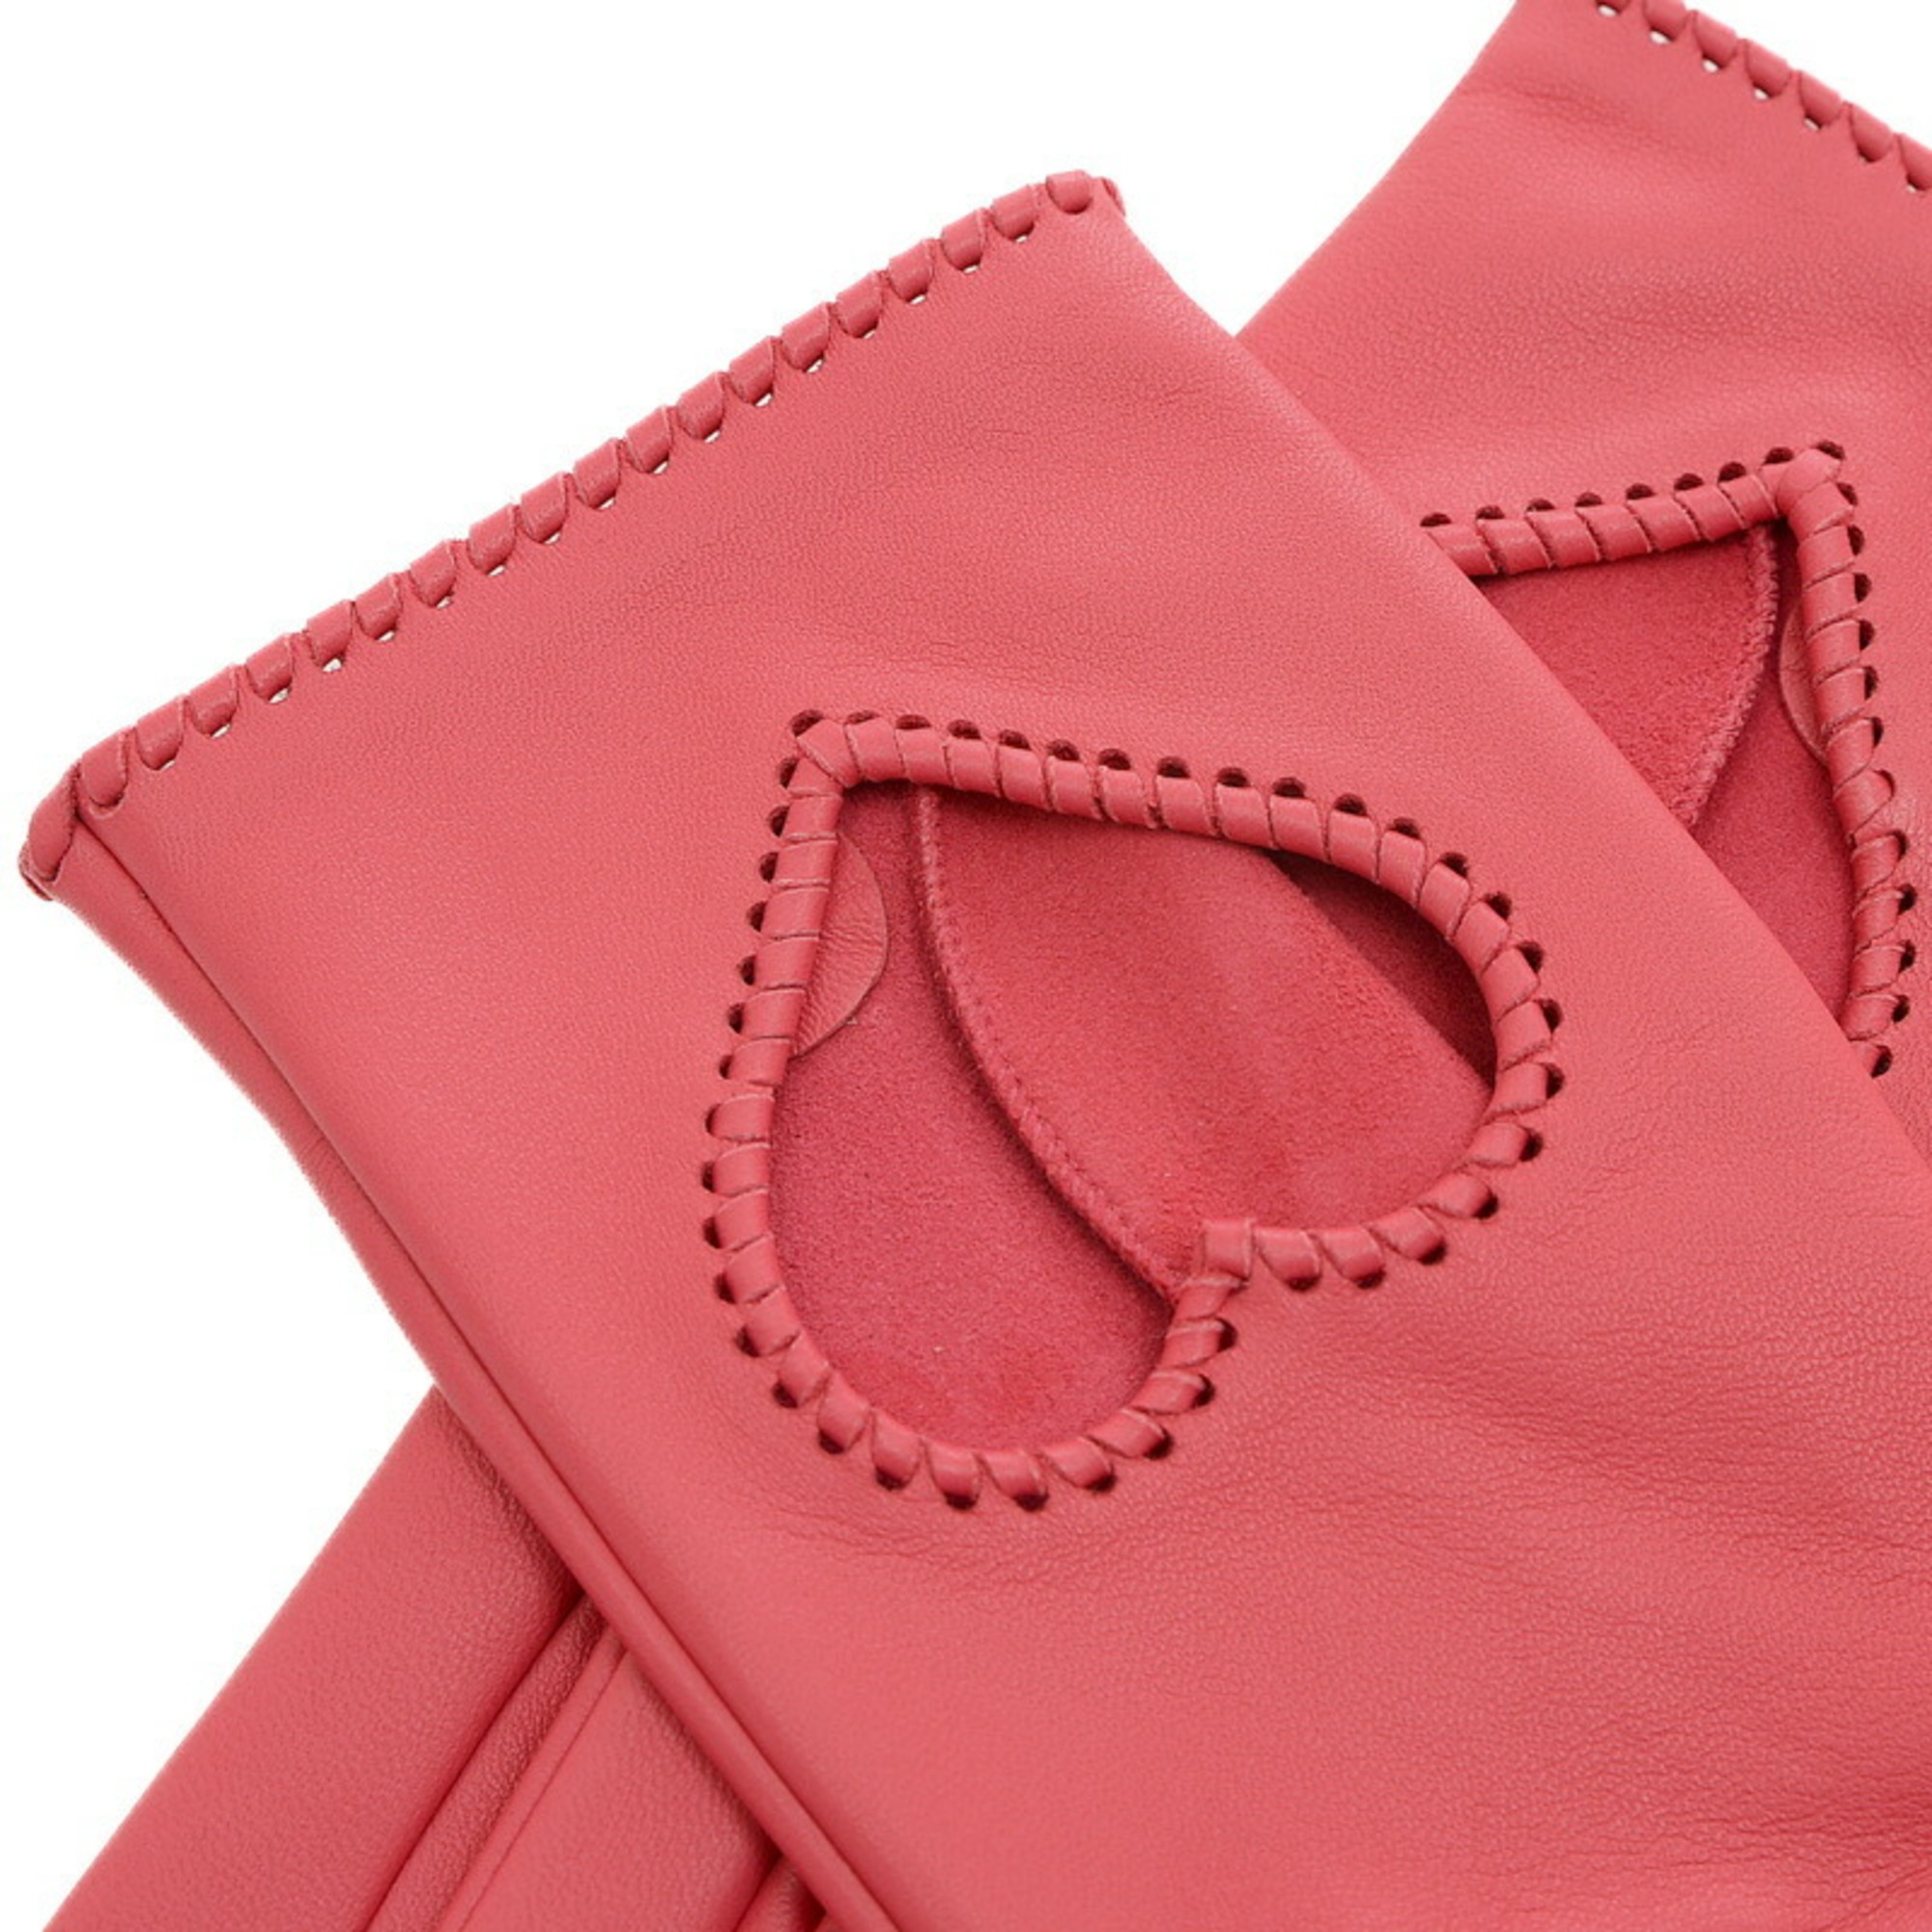 Hermes Heart Gloves Lambskin Pink #7.5